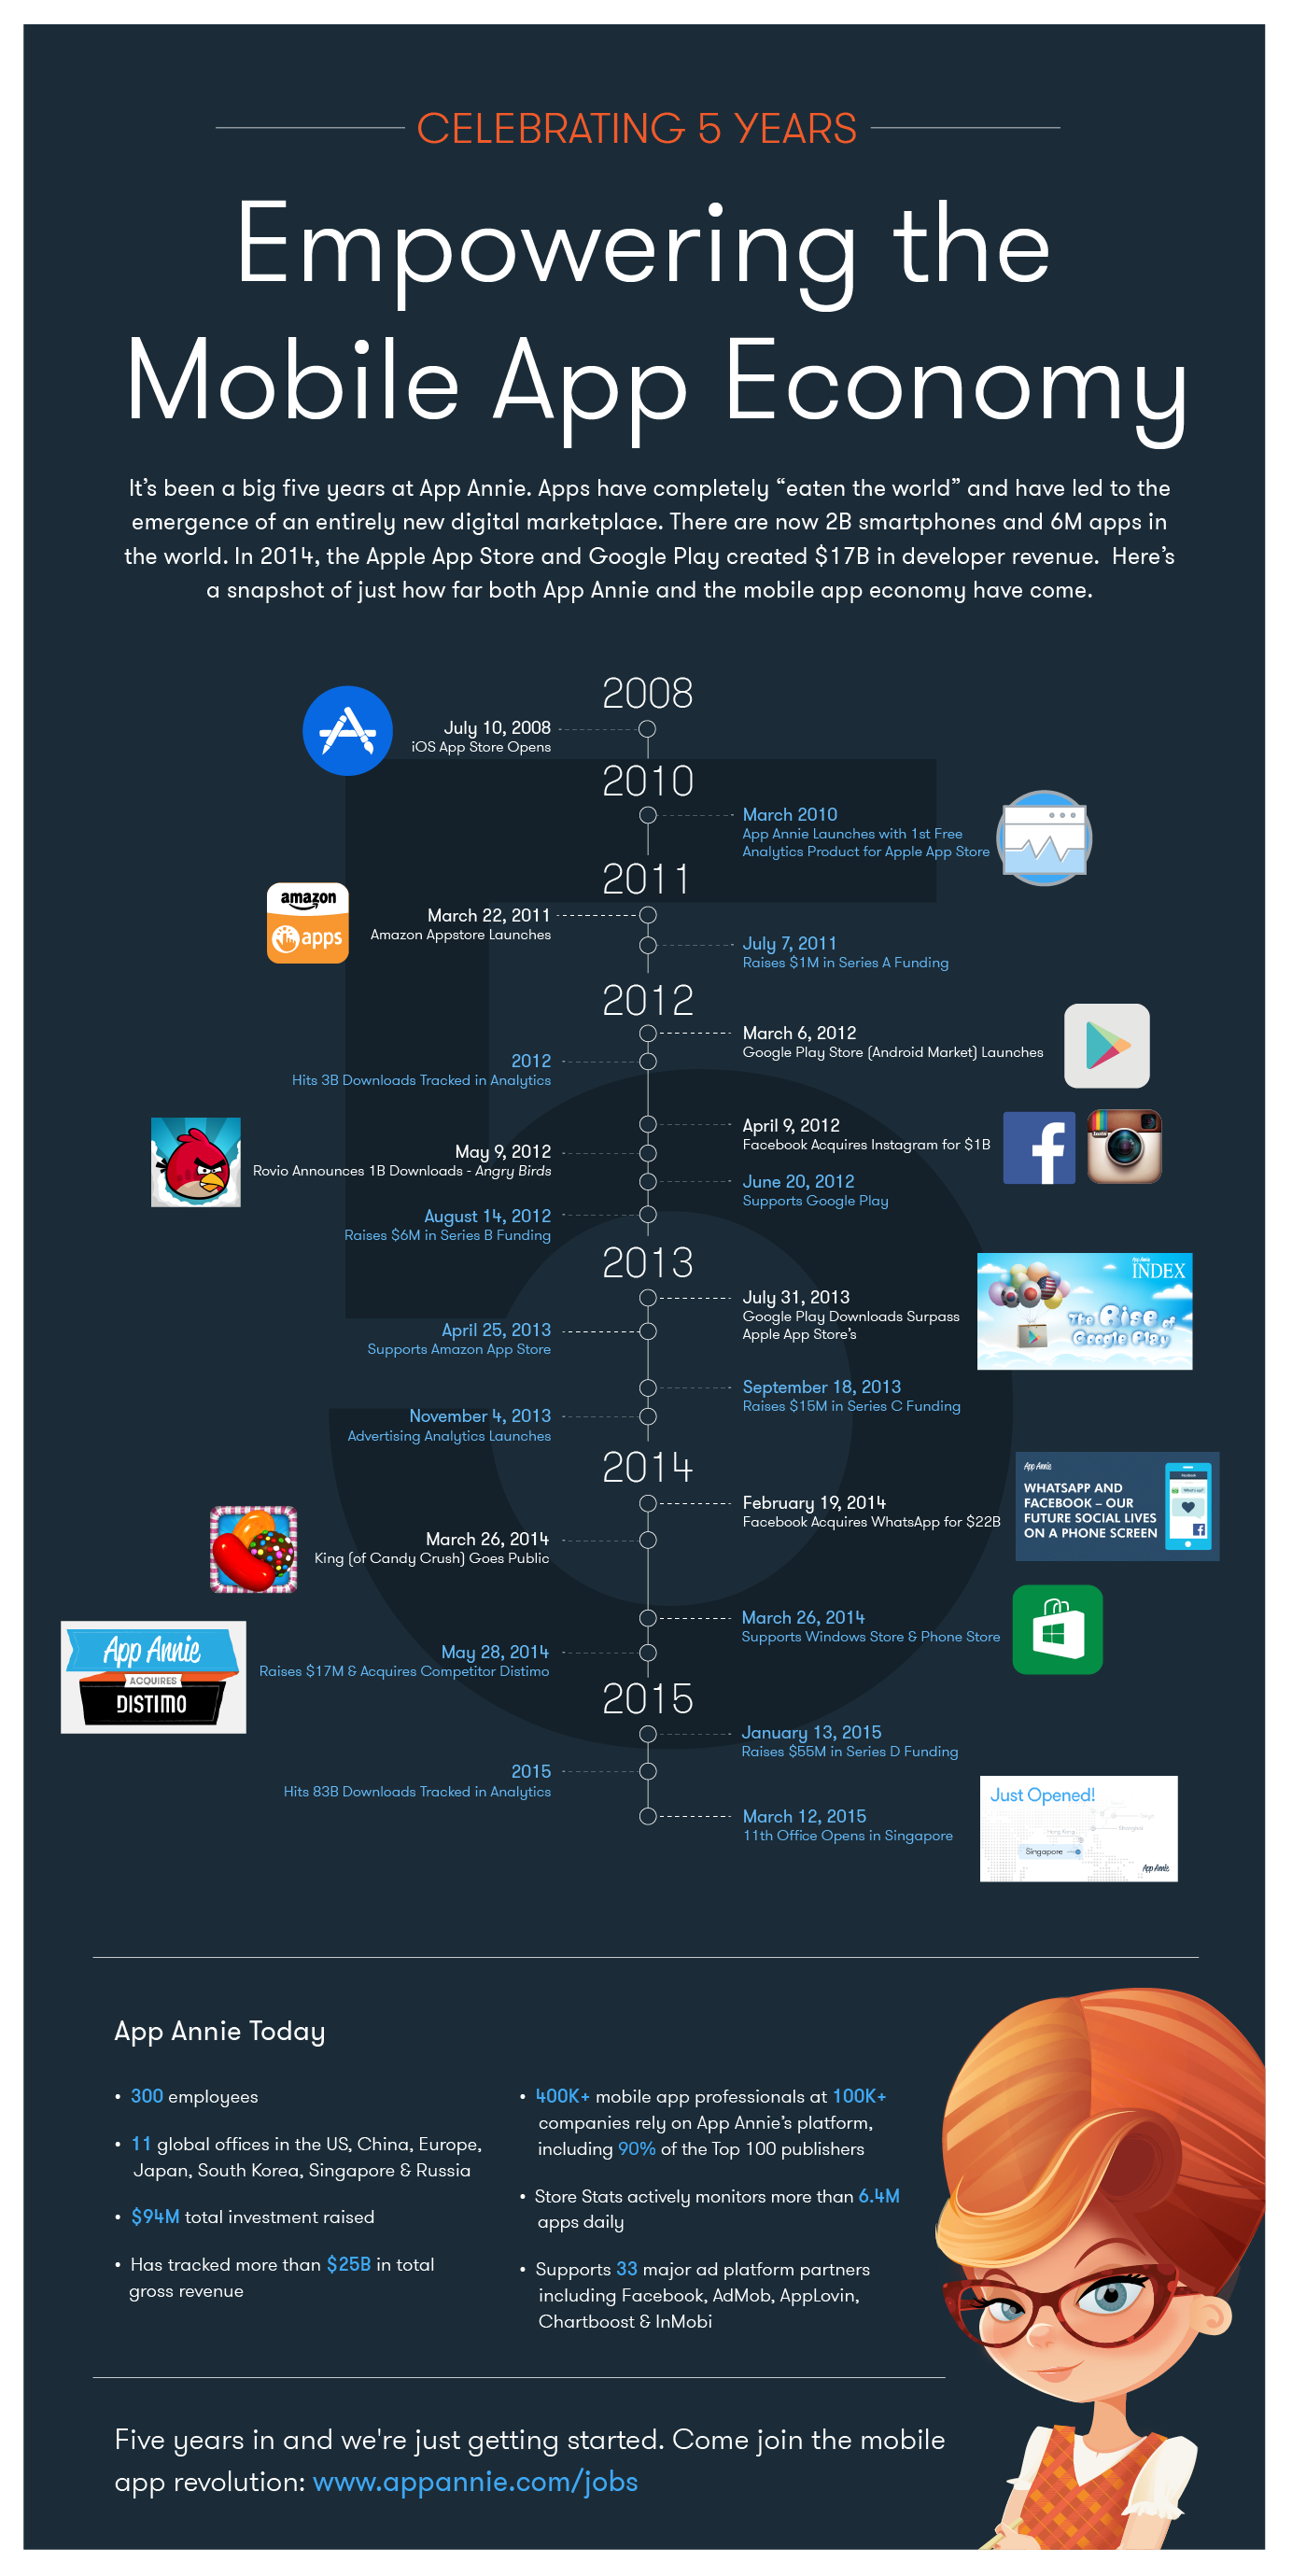 App Annie 5 Year Anniversary Infographic